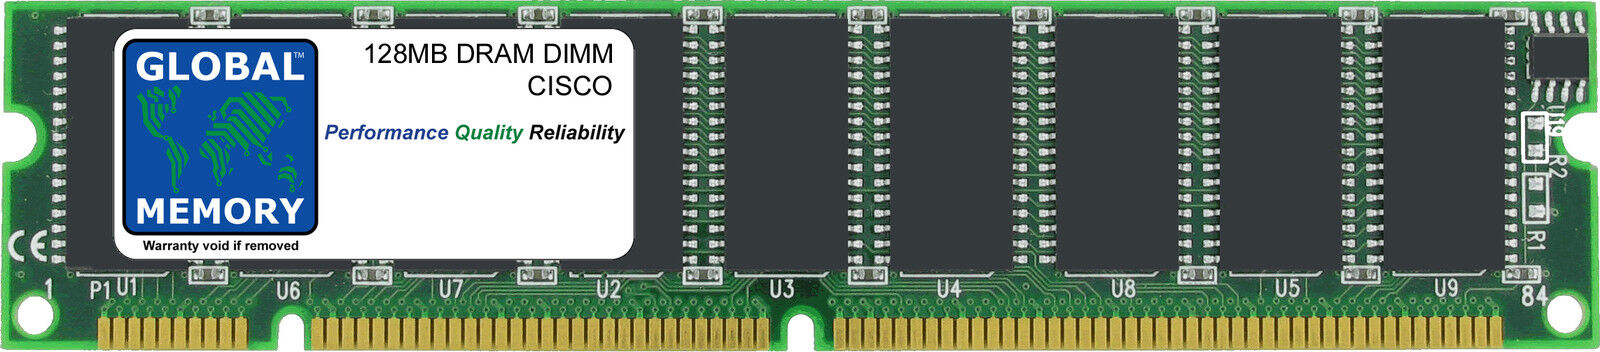 128MB DRAM DIMM CISCO 7200 NPE-175/225/300 & NSE-1/1-7206 VXR (MEM-SD-NPE-128MB)